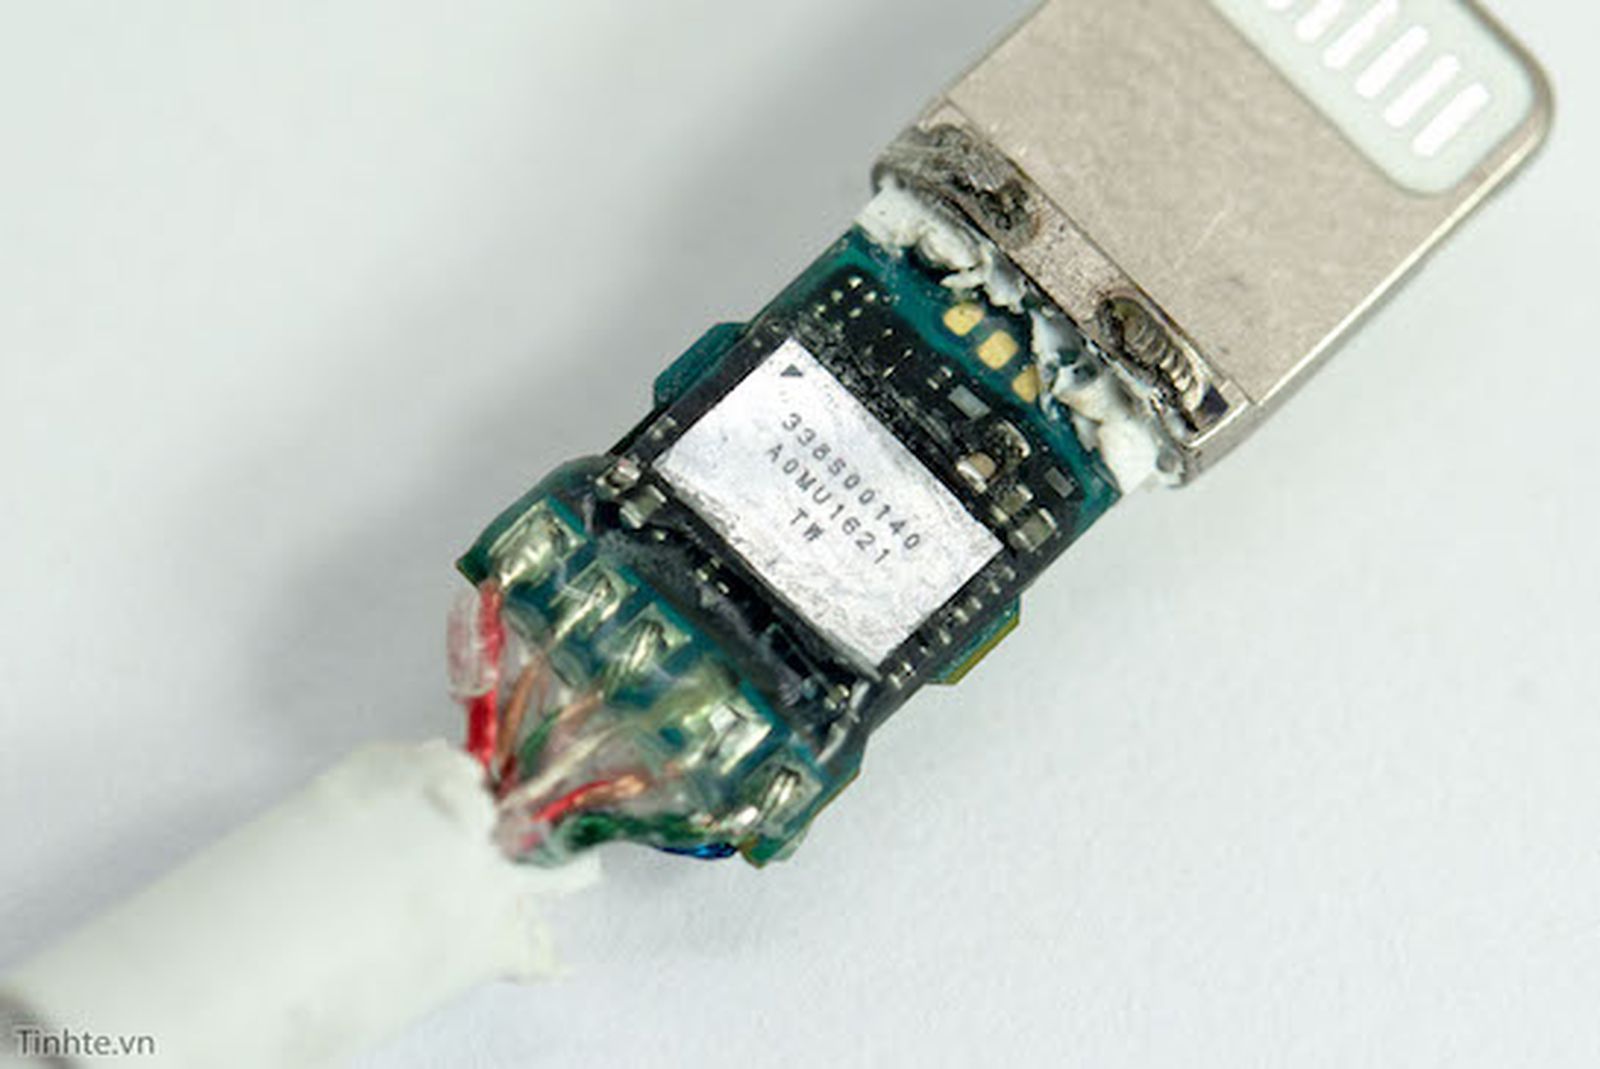 Teardown Confirms Digital-to-Analog Converter in Lightning EarPods